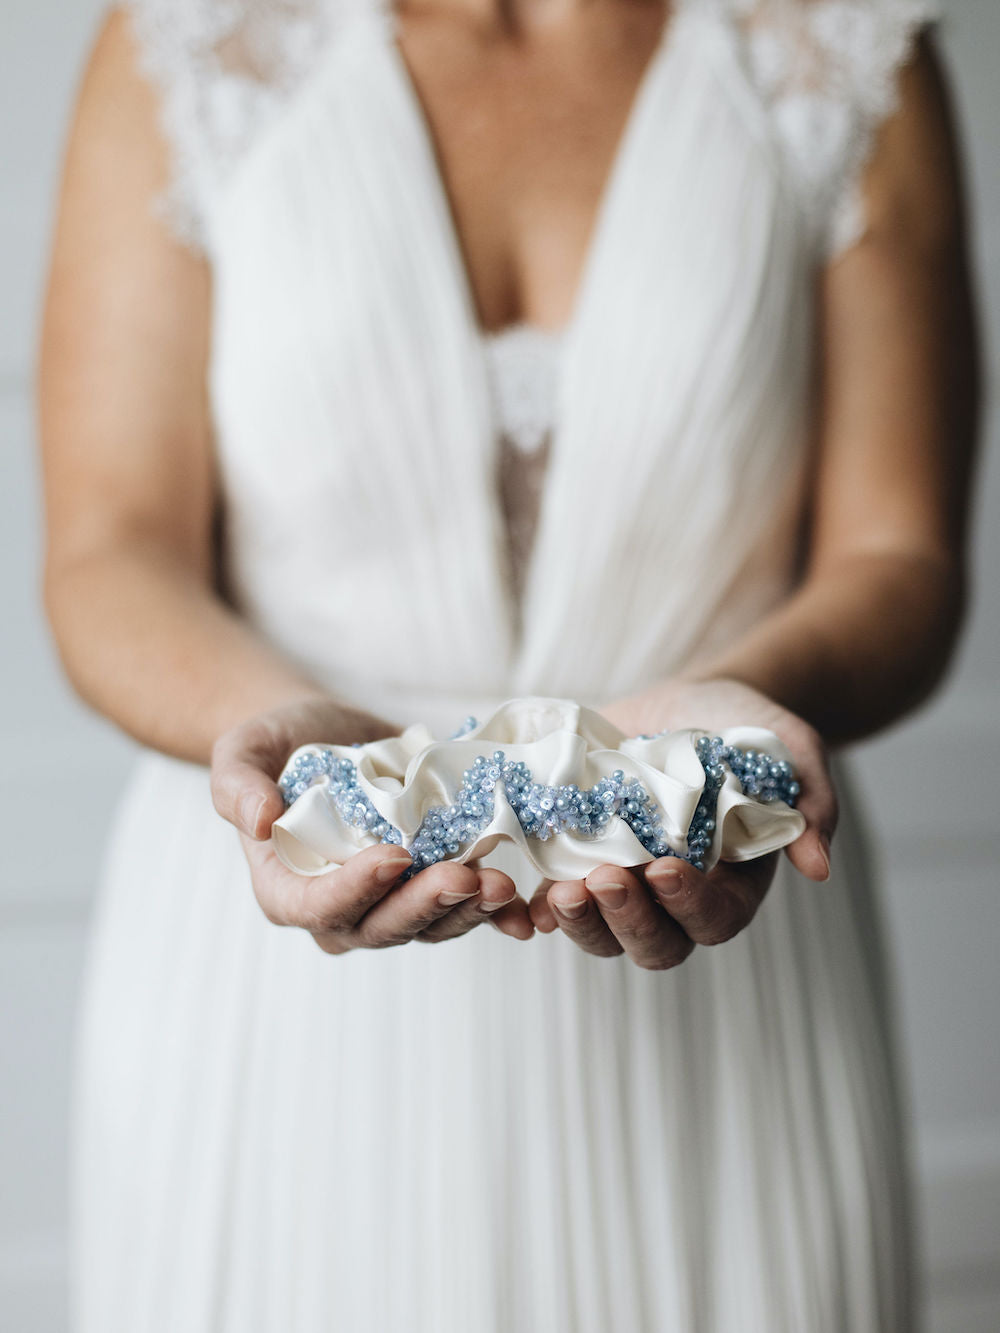 luxury sparkle wedding garter with blue beads, handmade heirloom by The Garter Girl